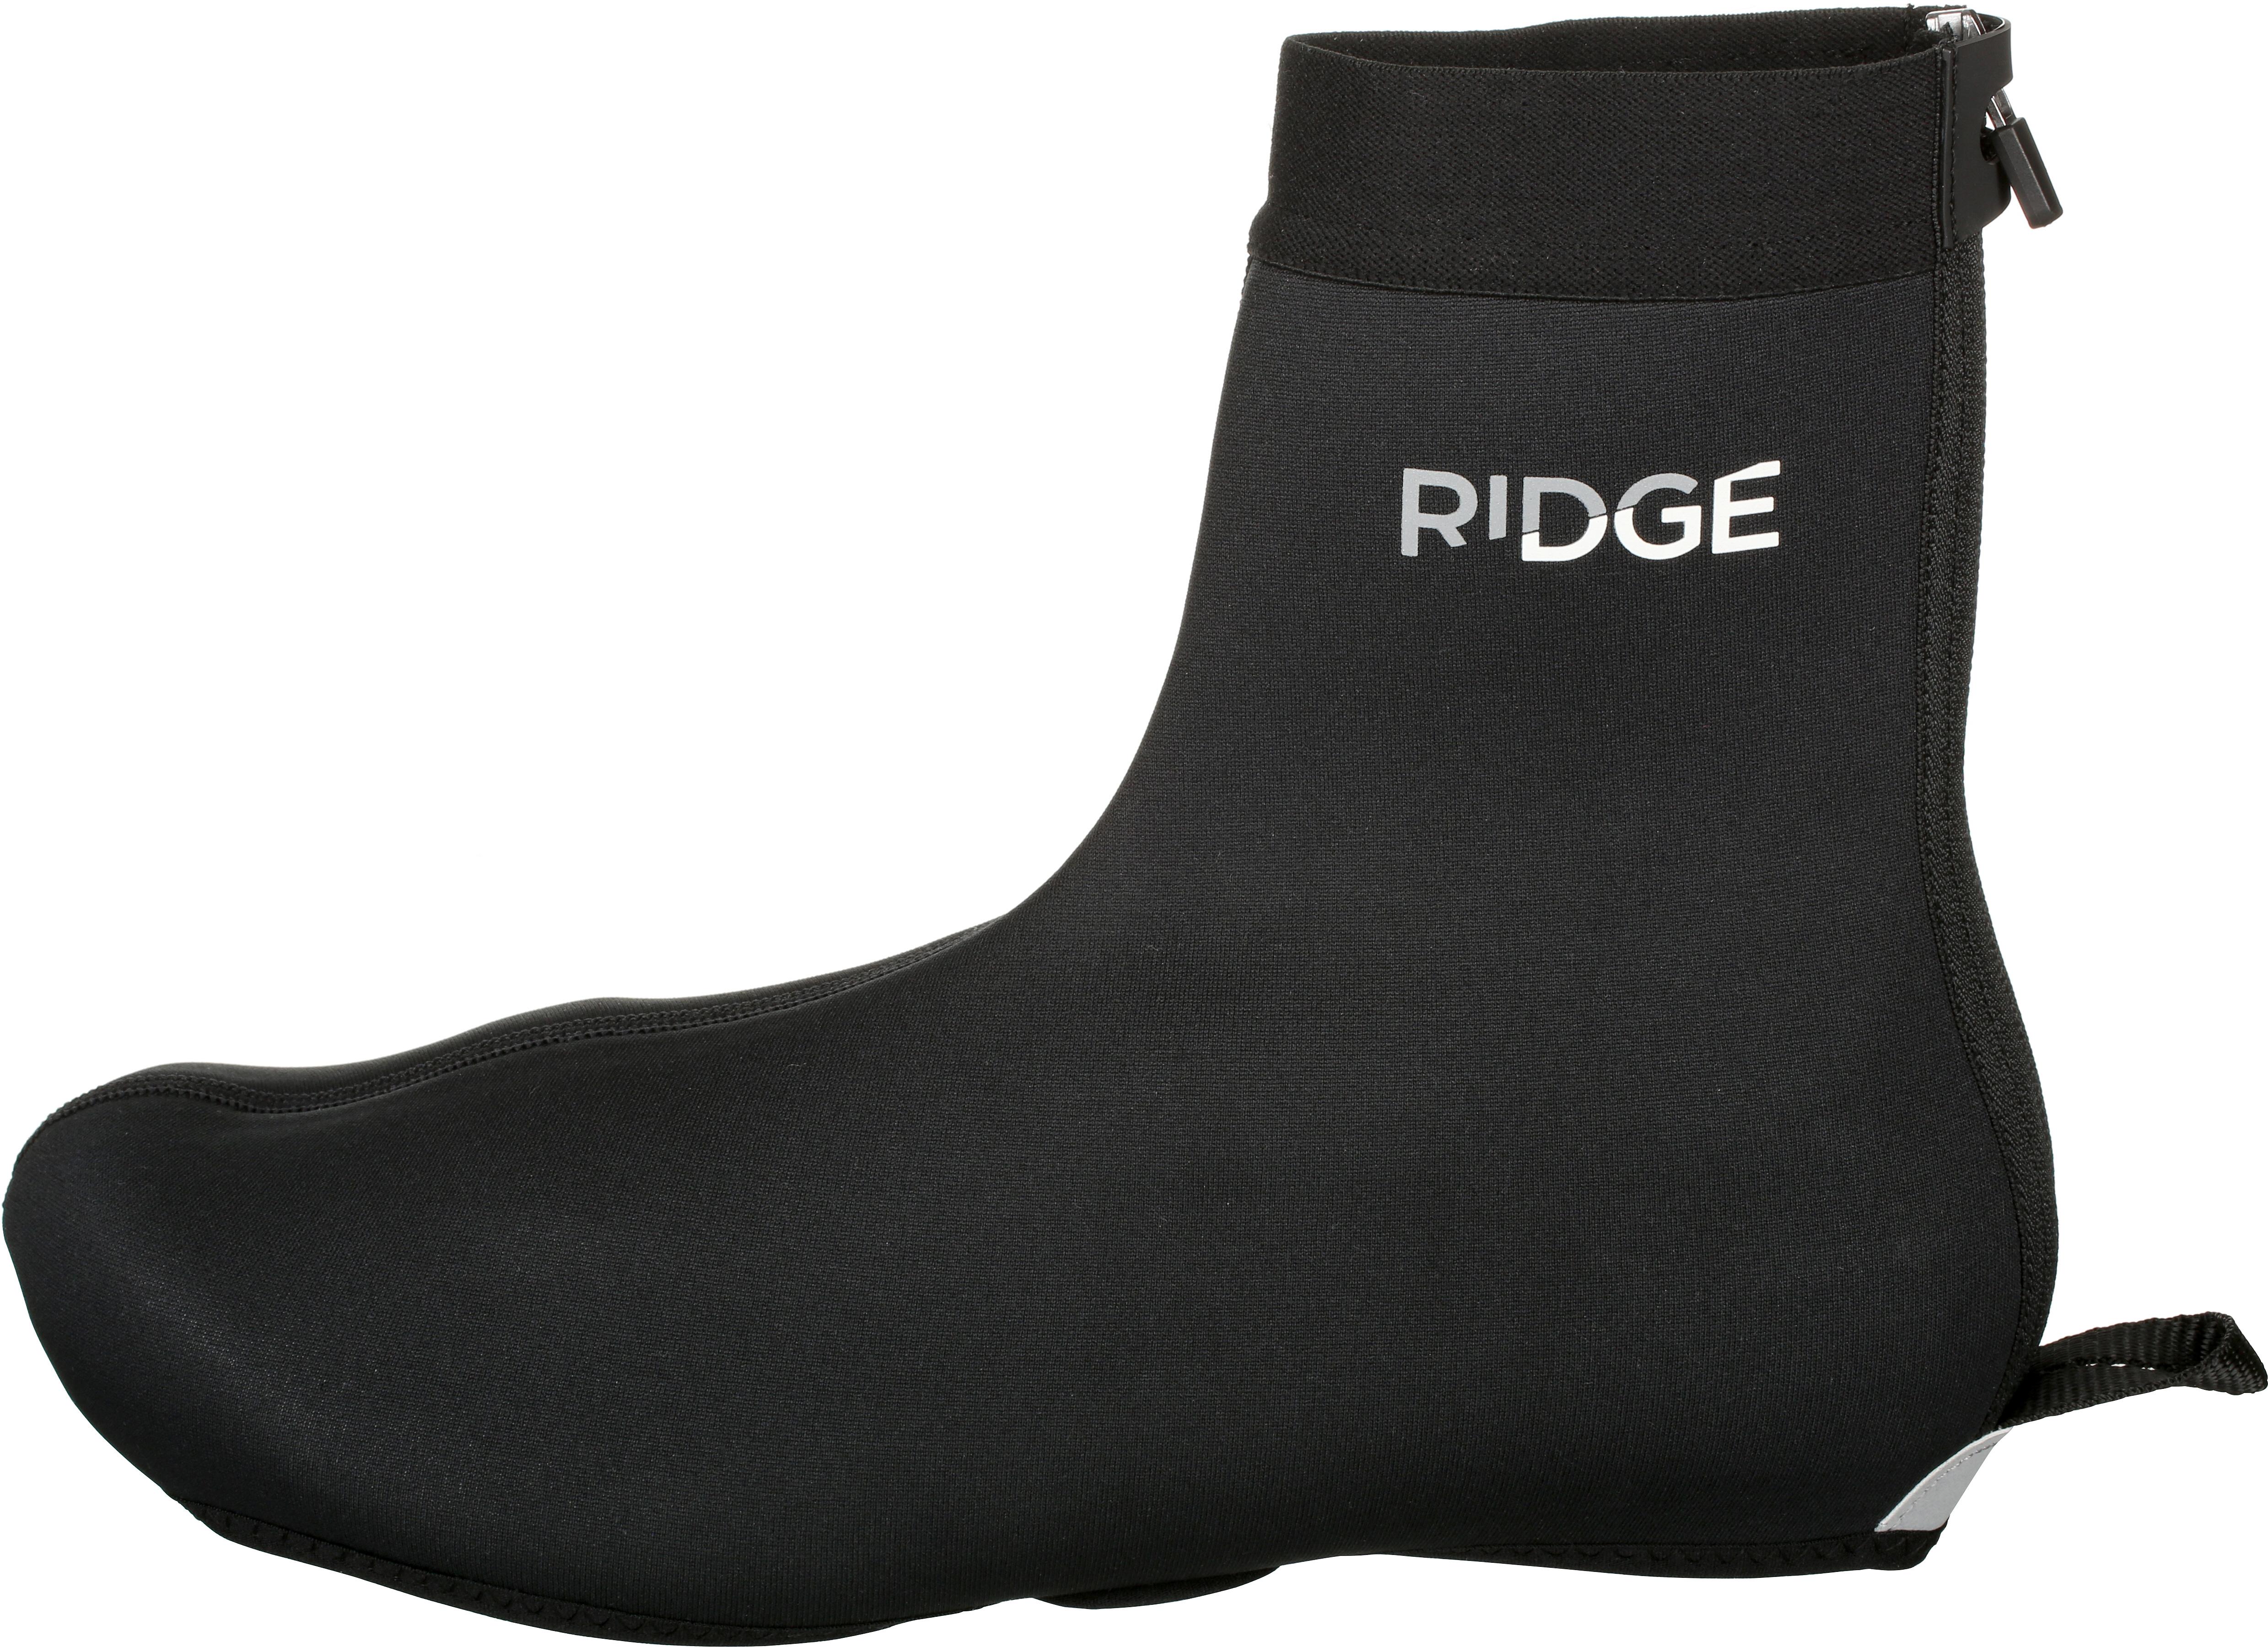 Ridge Core Overshoe - Black, Small